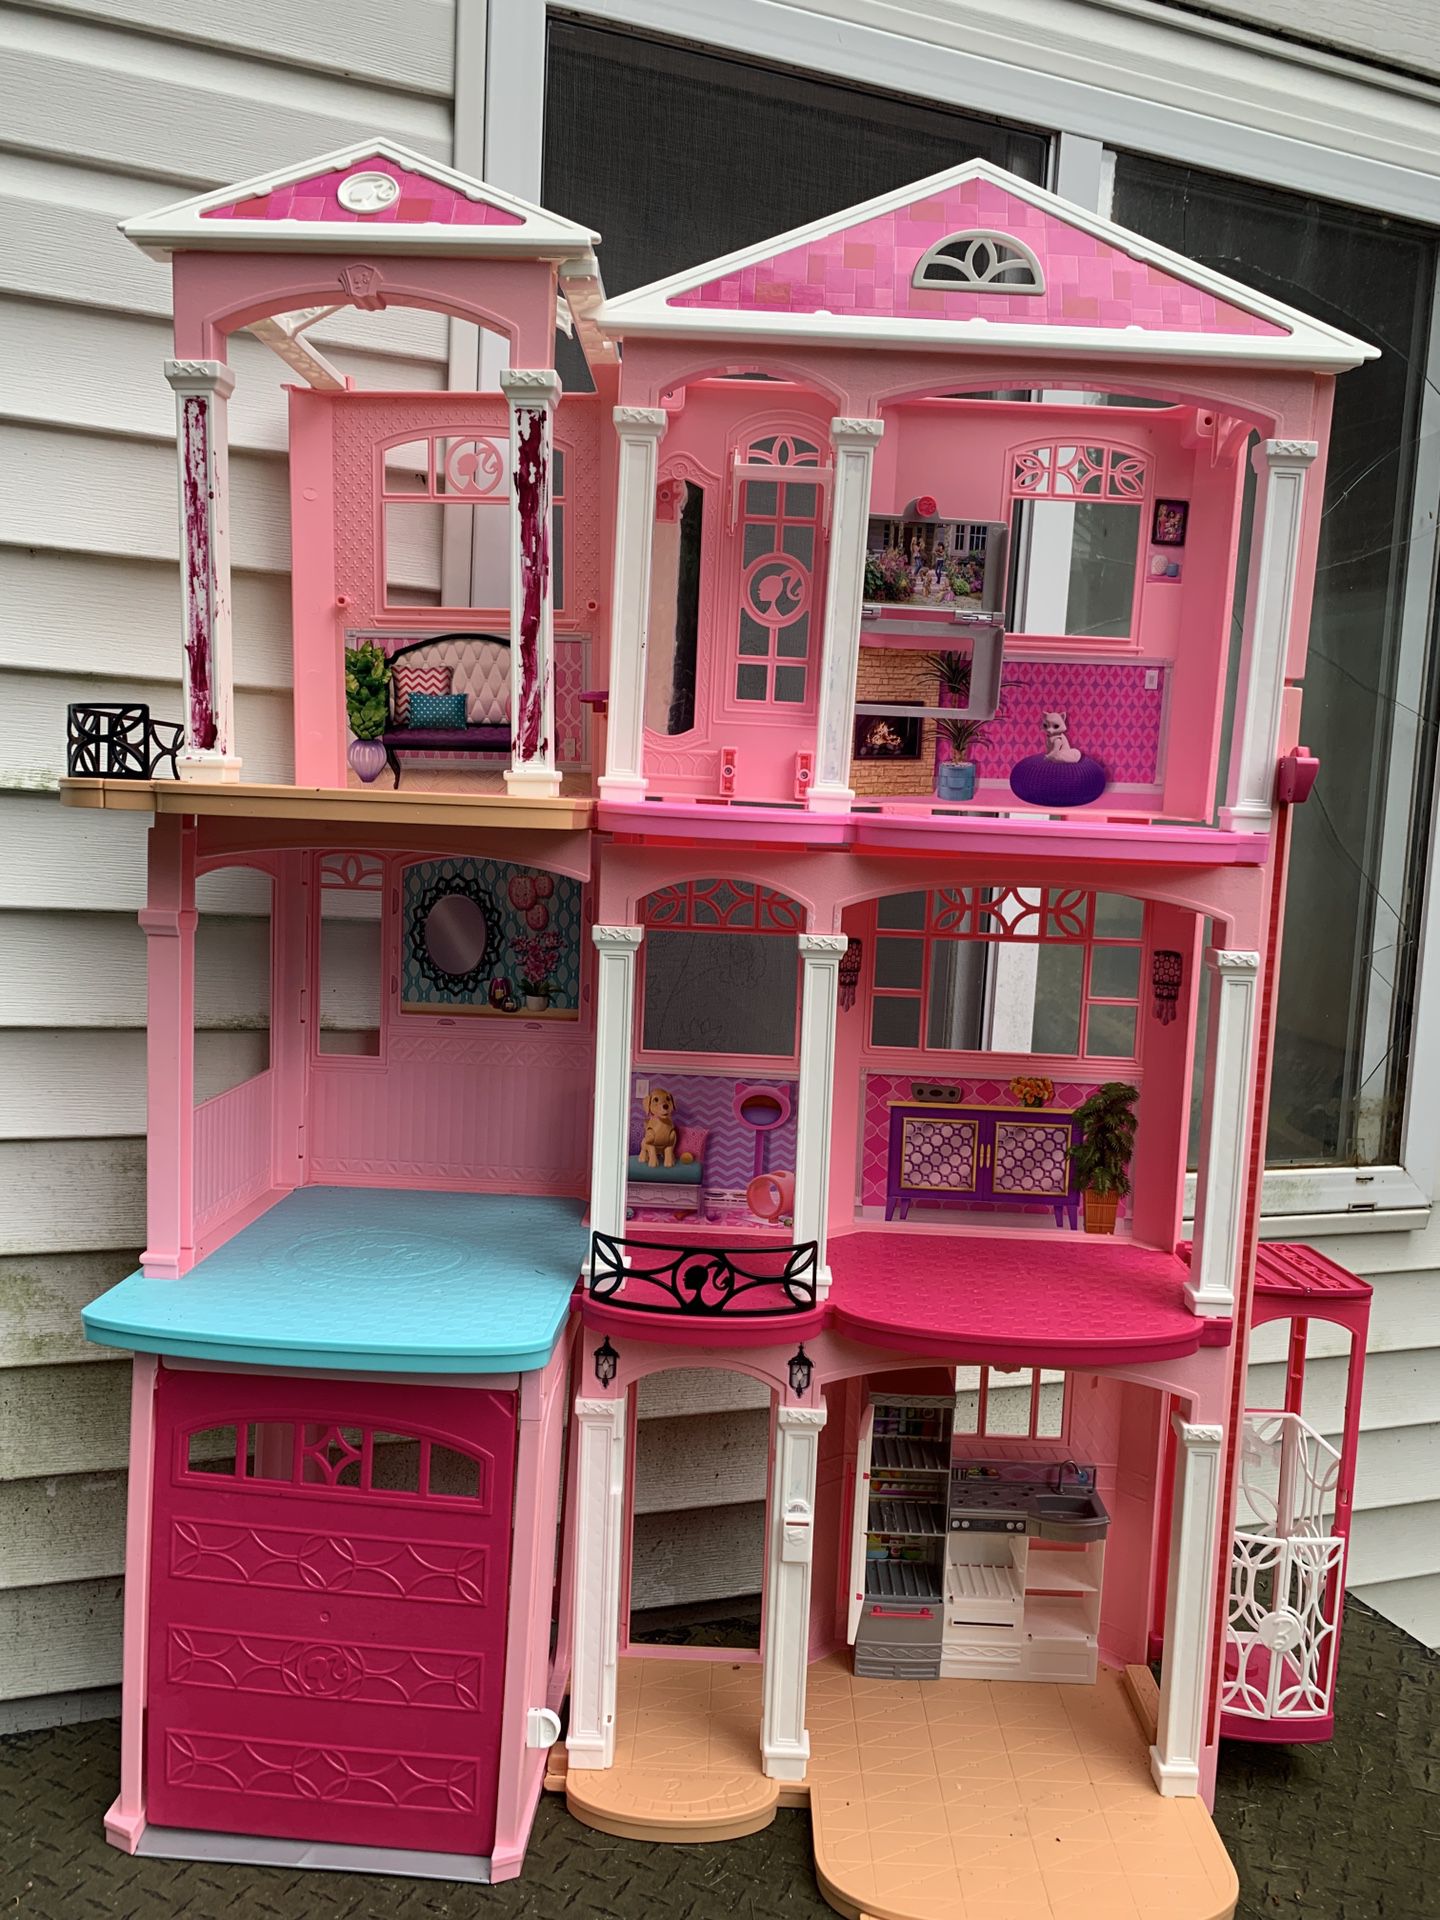 Barbie dream house